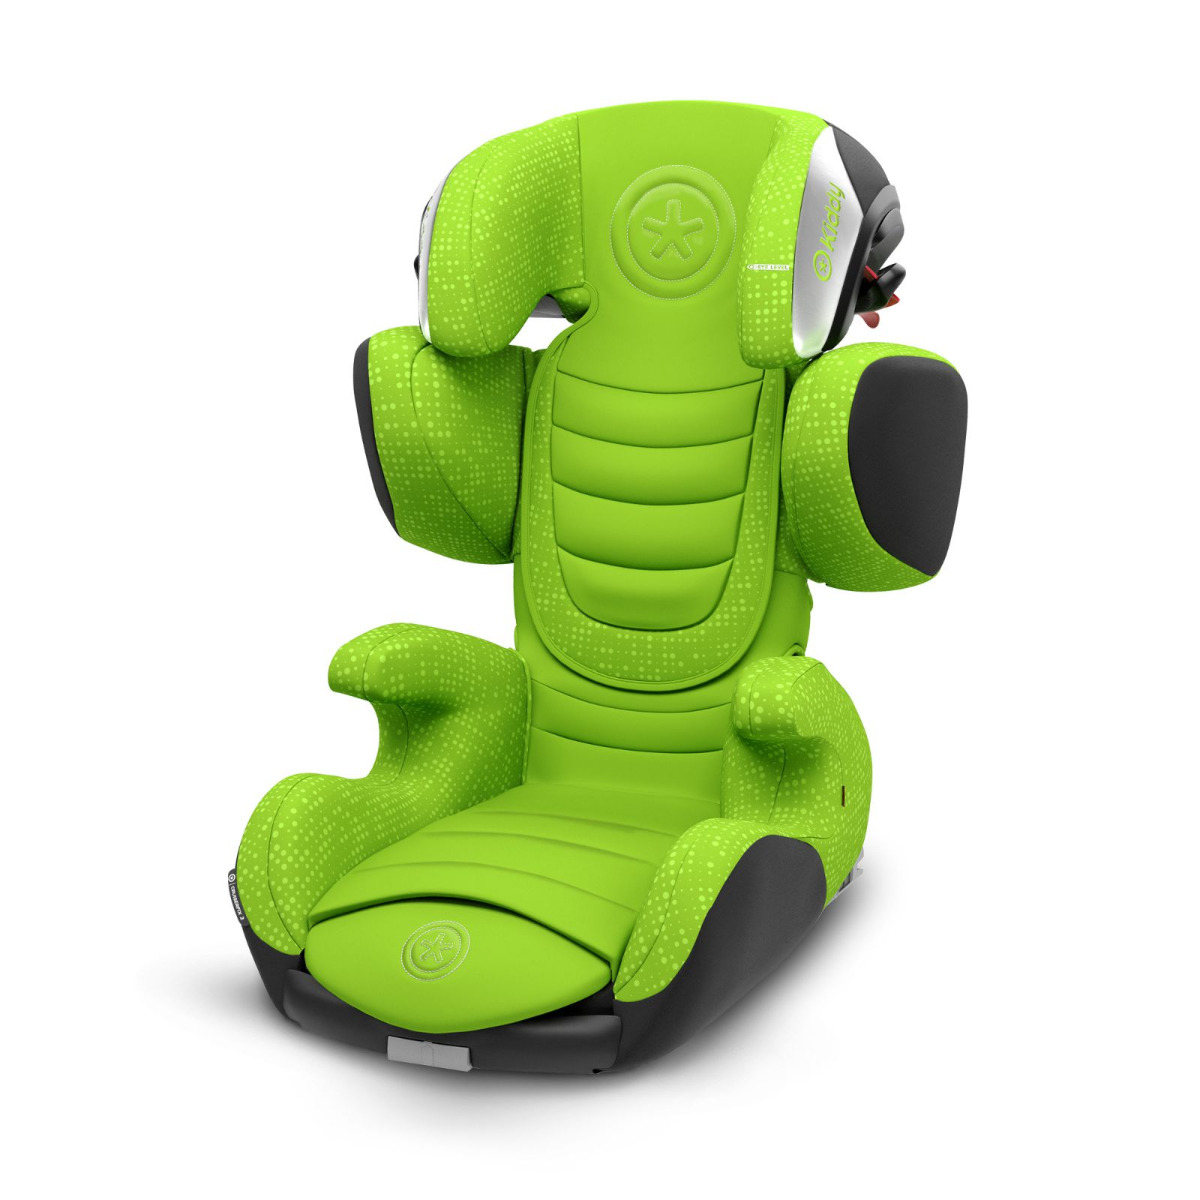 Kindersitz Cruiserfix 3 grün